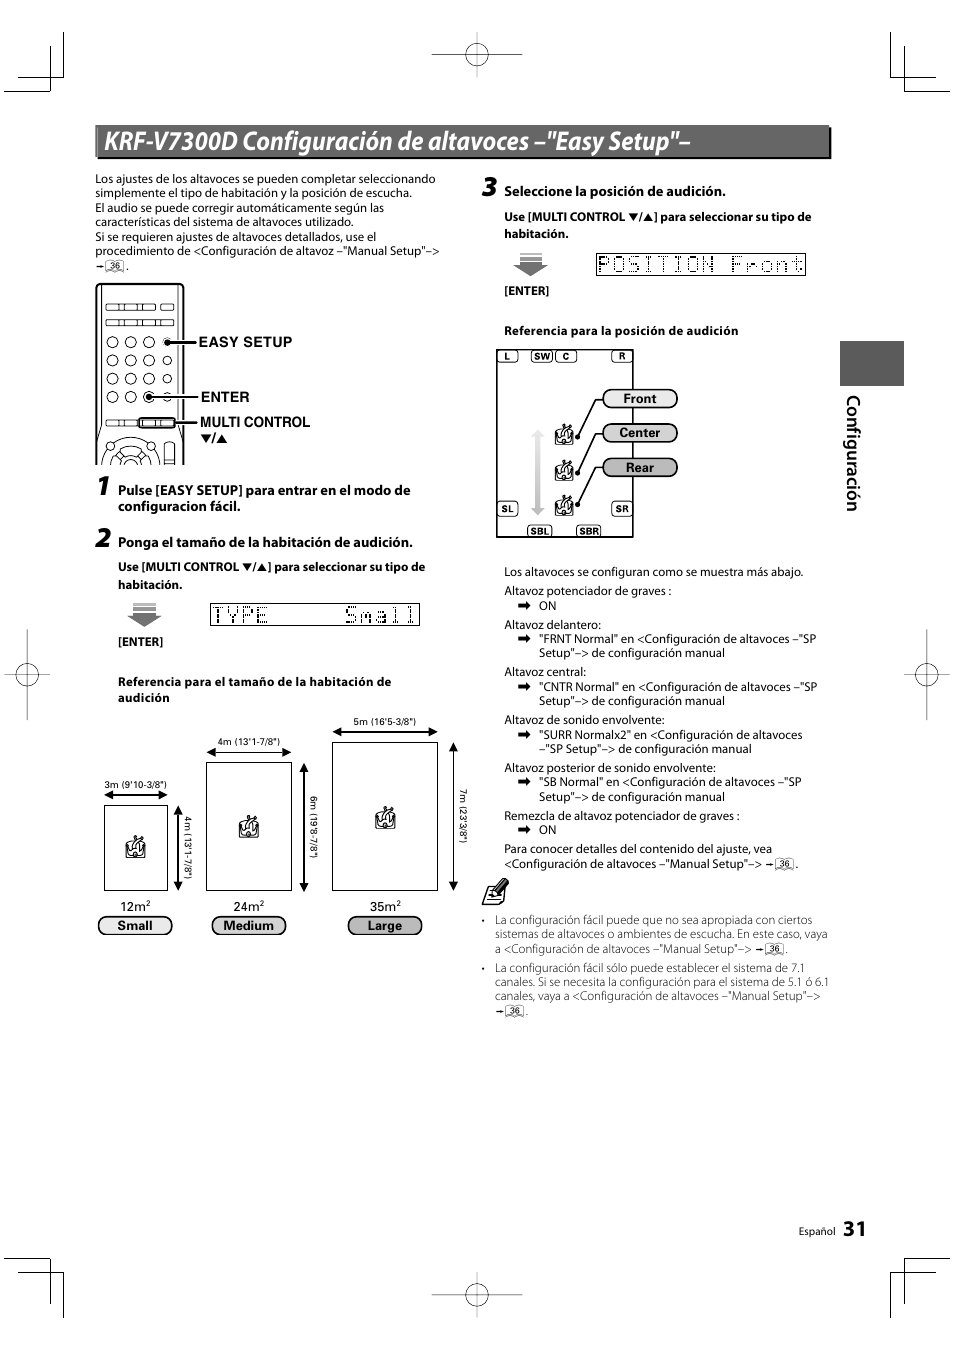 Krf-v7300d configuración de altavoces –"easy setup, Co nf iguración | Kenwood KRF-V8300D-S User Manual | Page 31 / 72